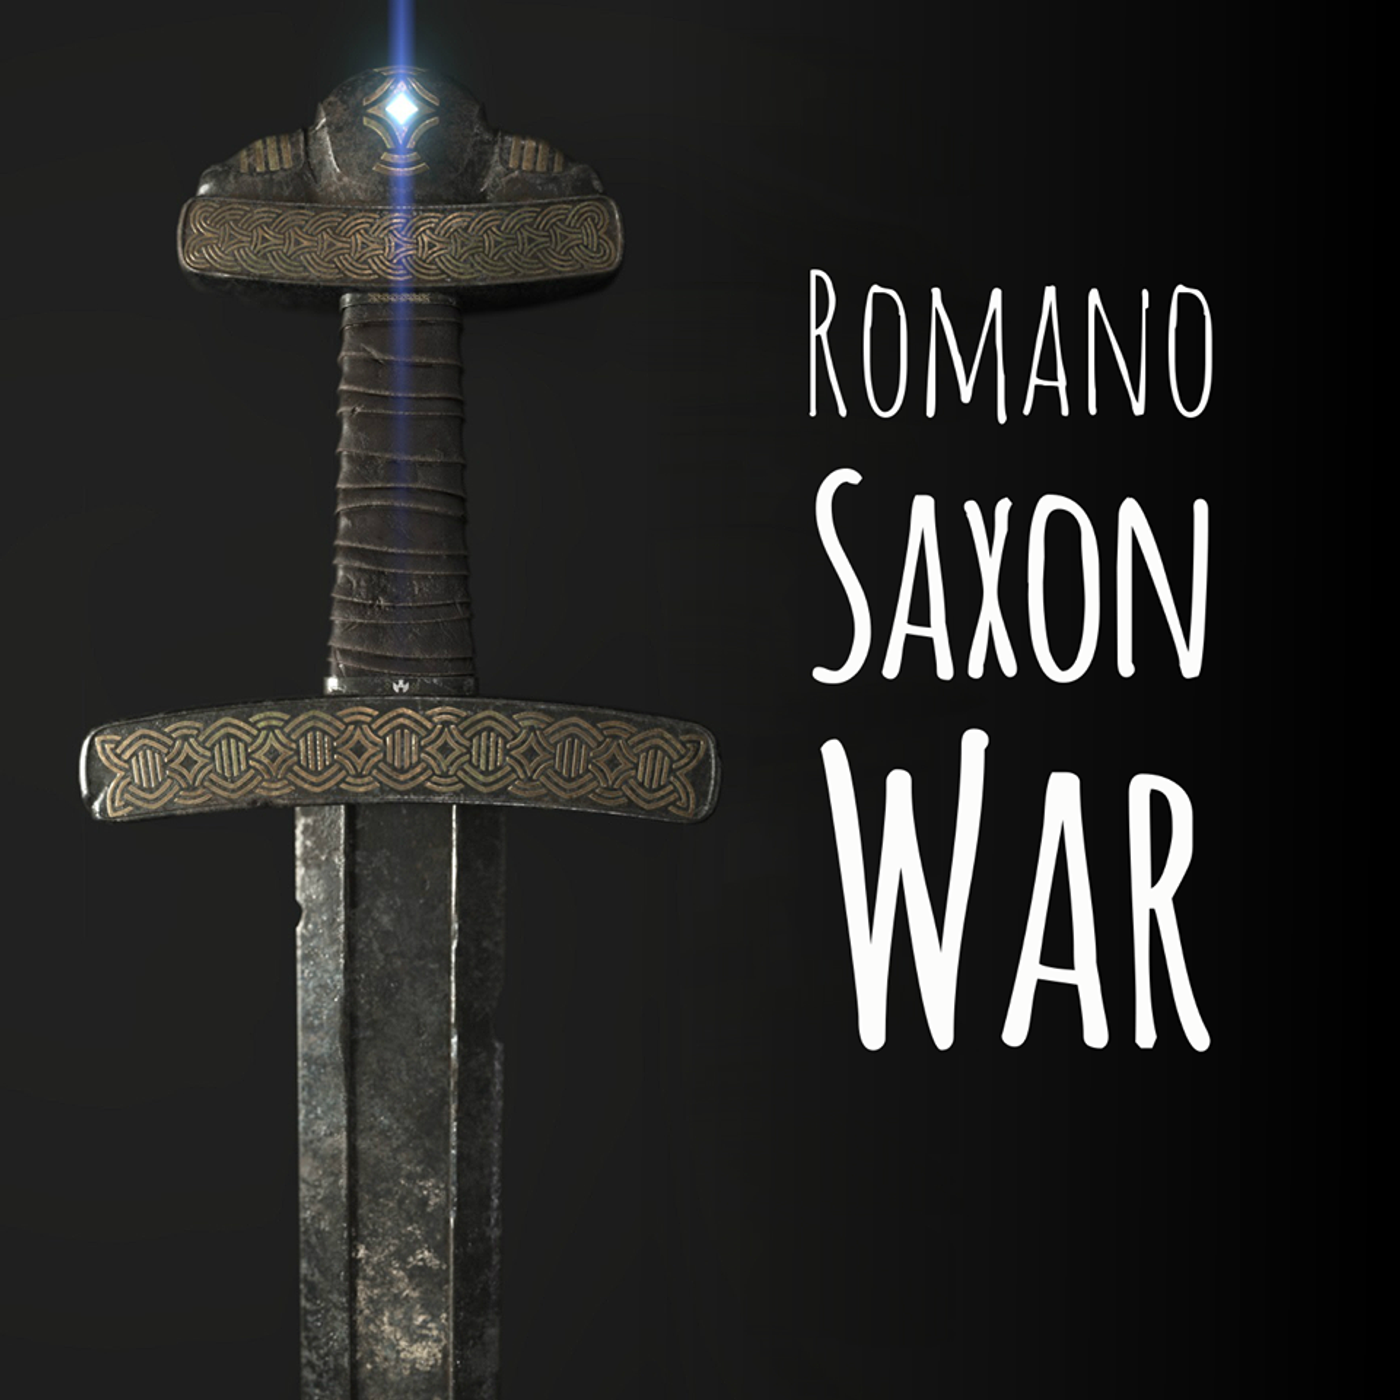 Romano Saxon War, Part 6